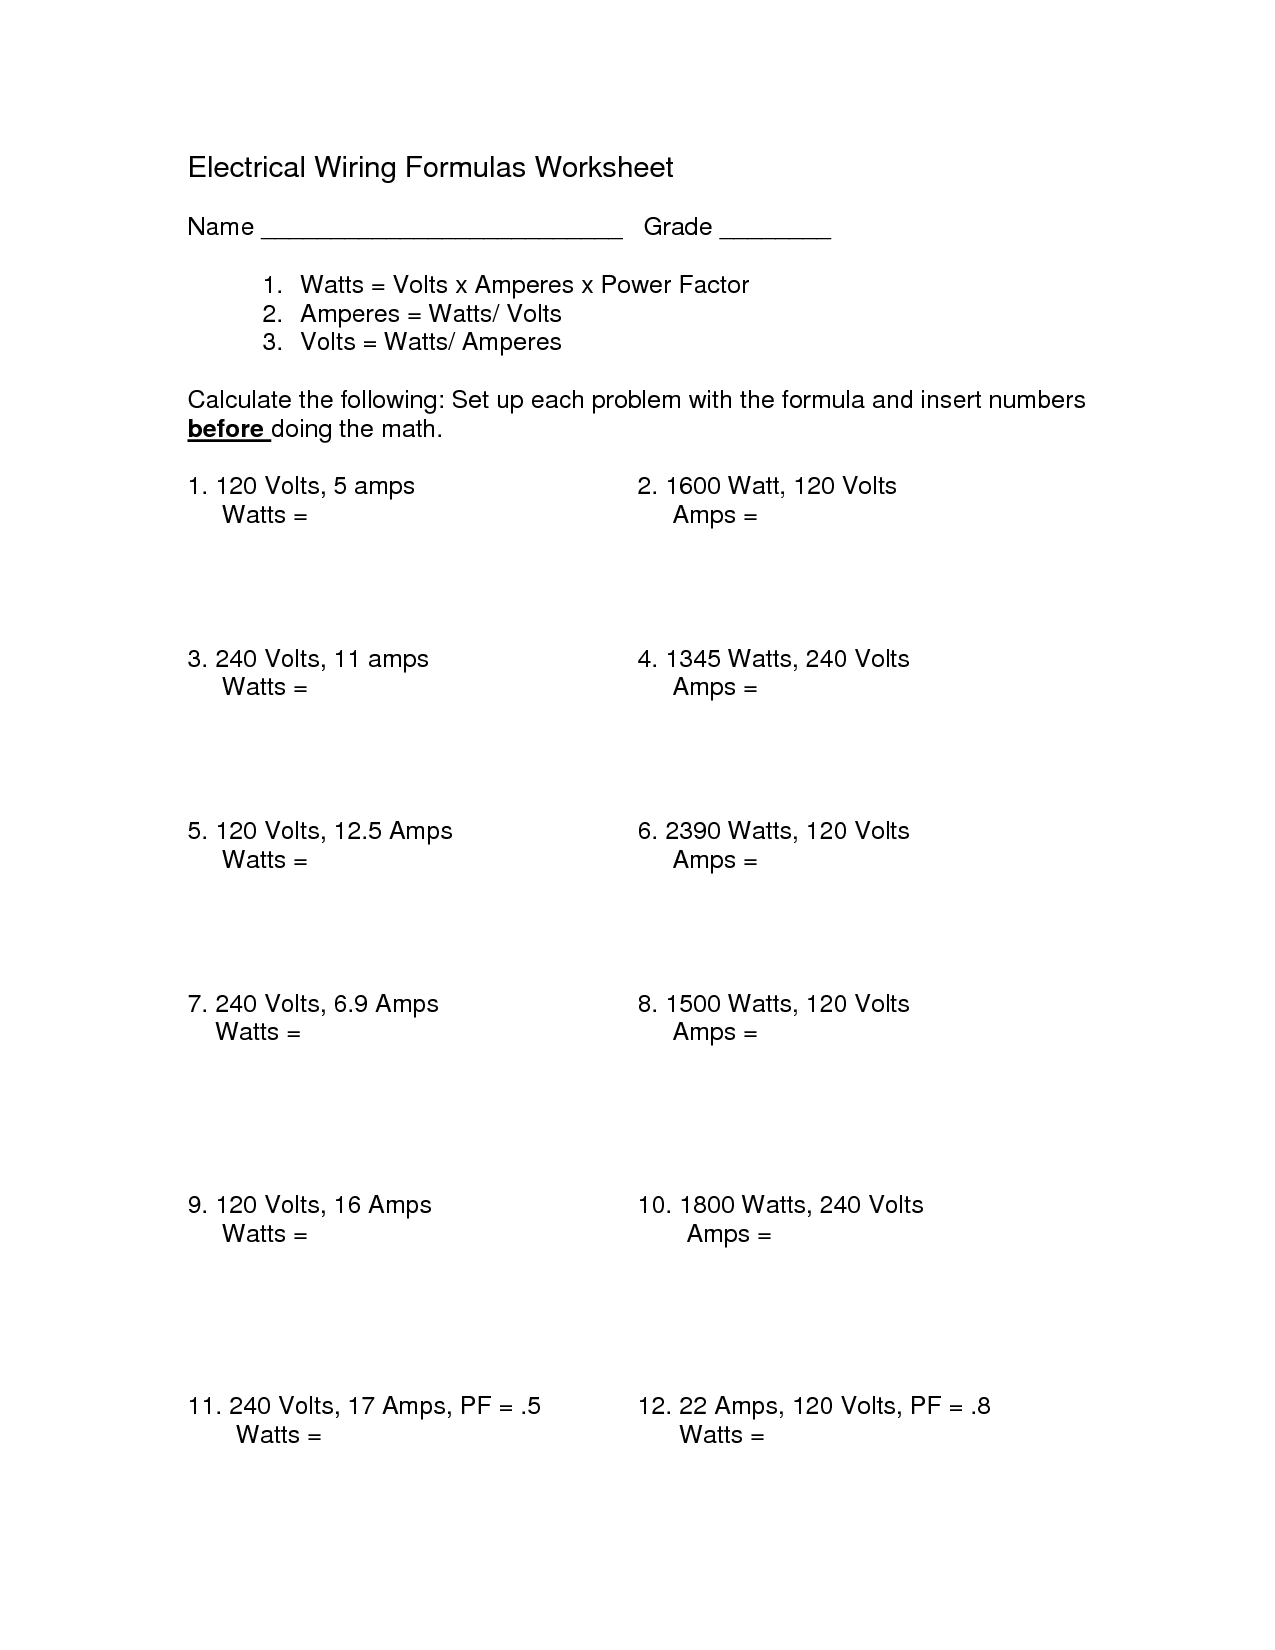 Electrical Formulas Worksheet Image